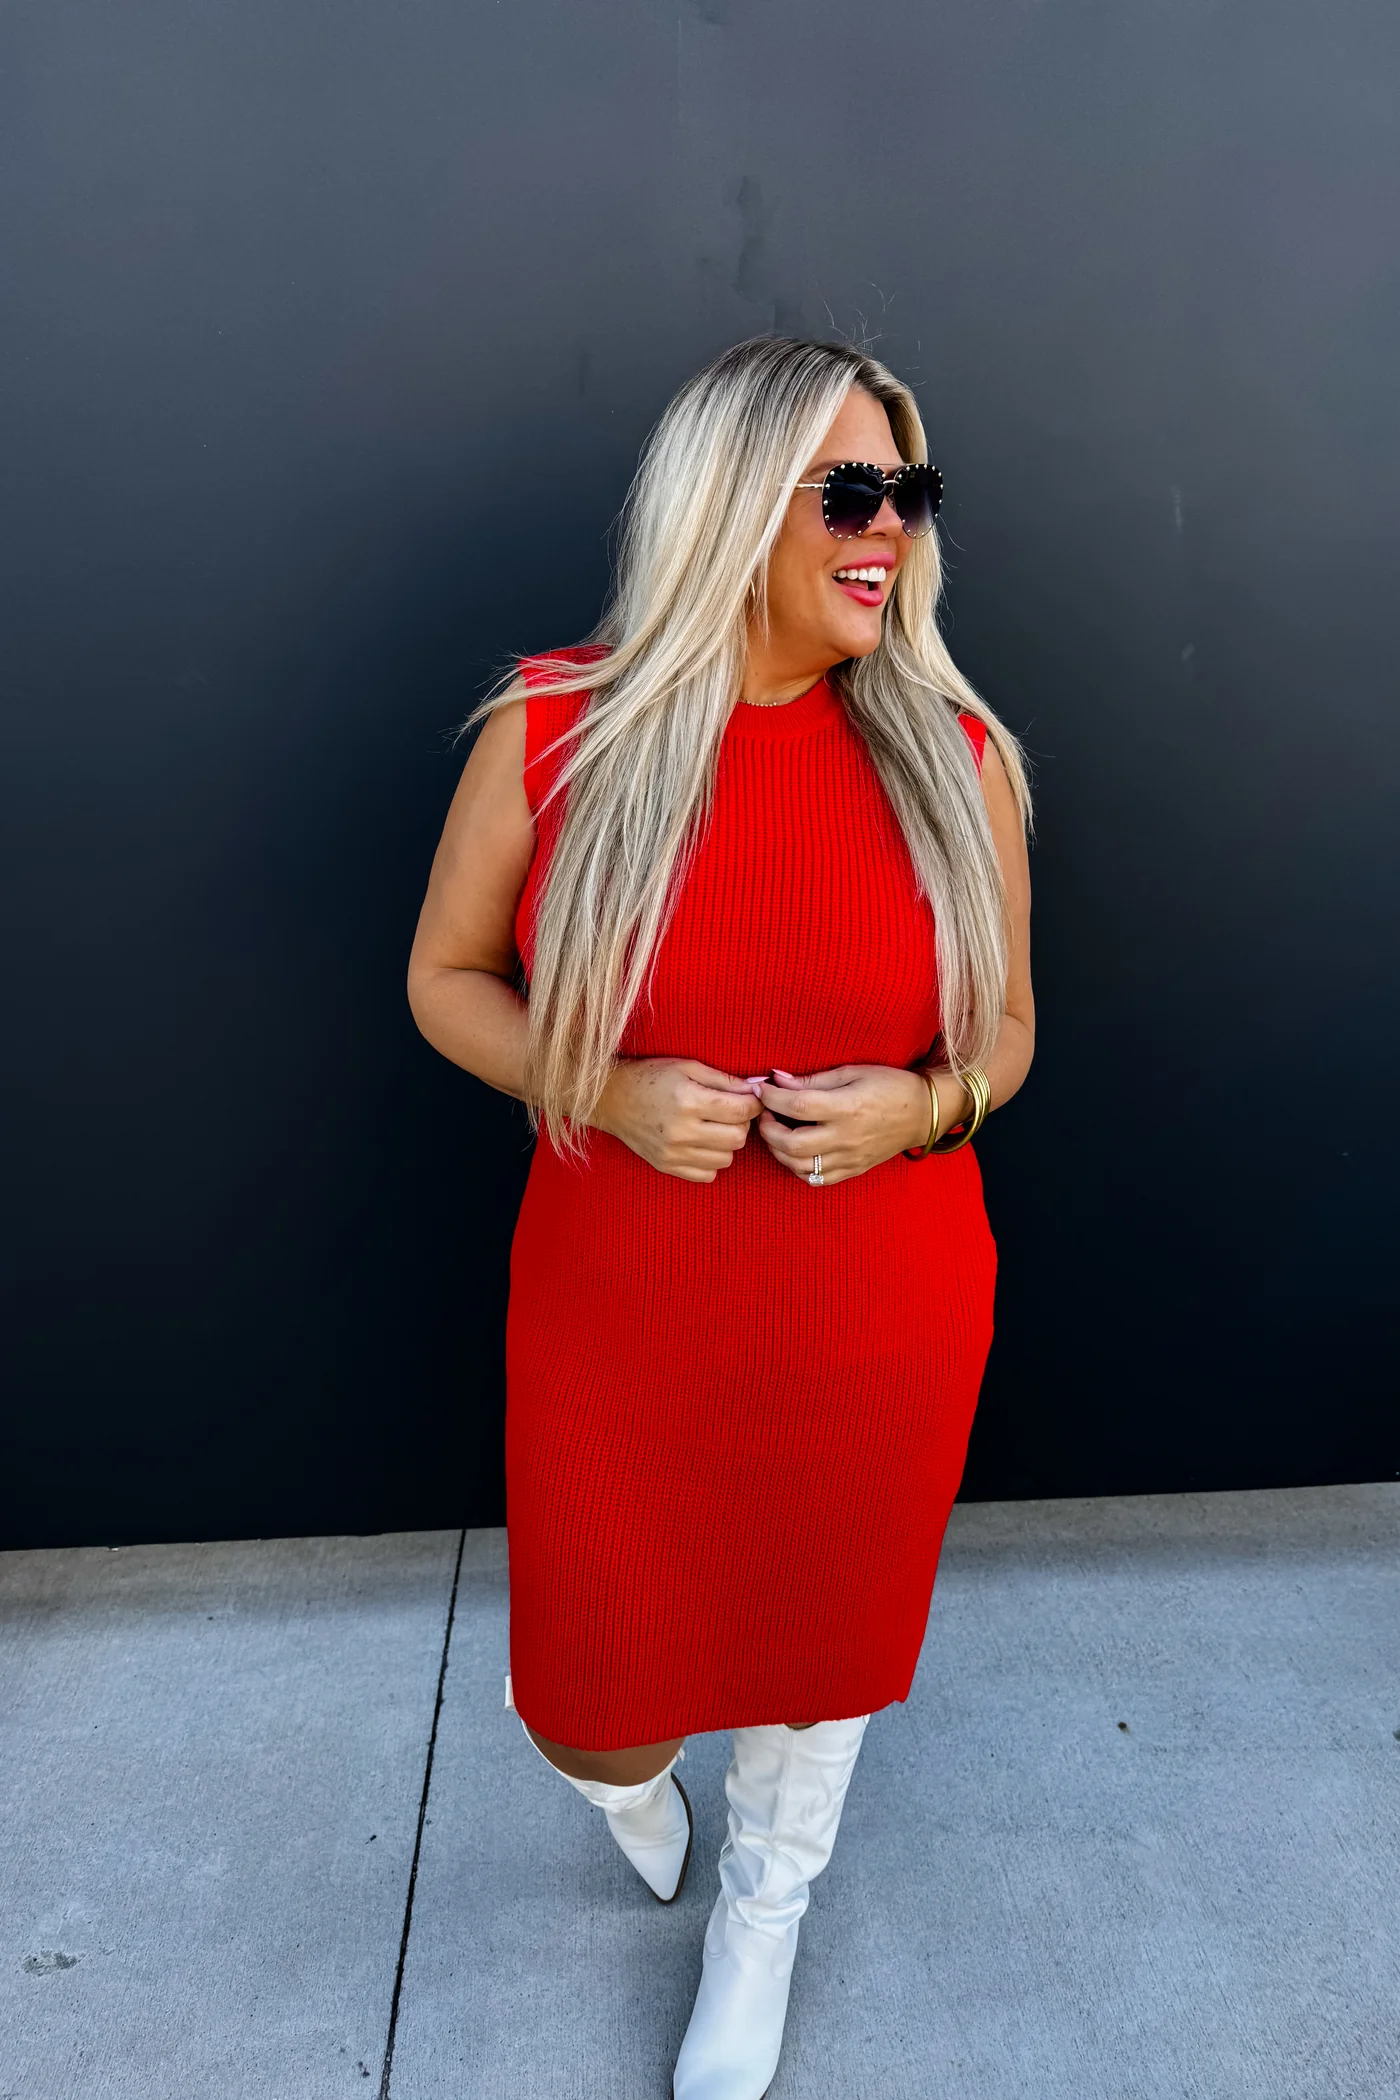 VANESSA SWEATER DRESS: RED